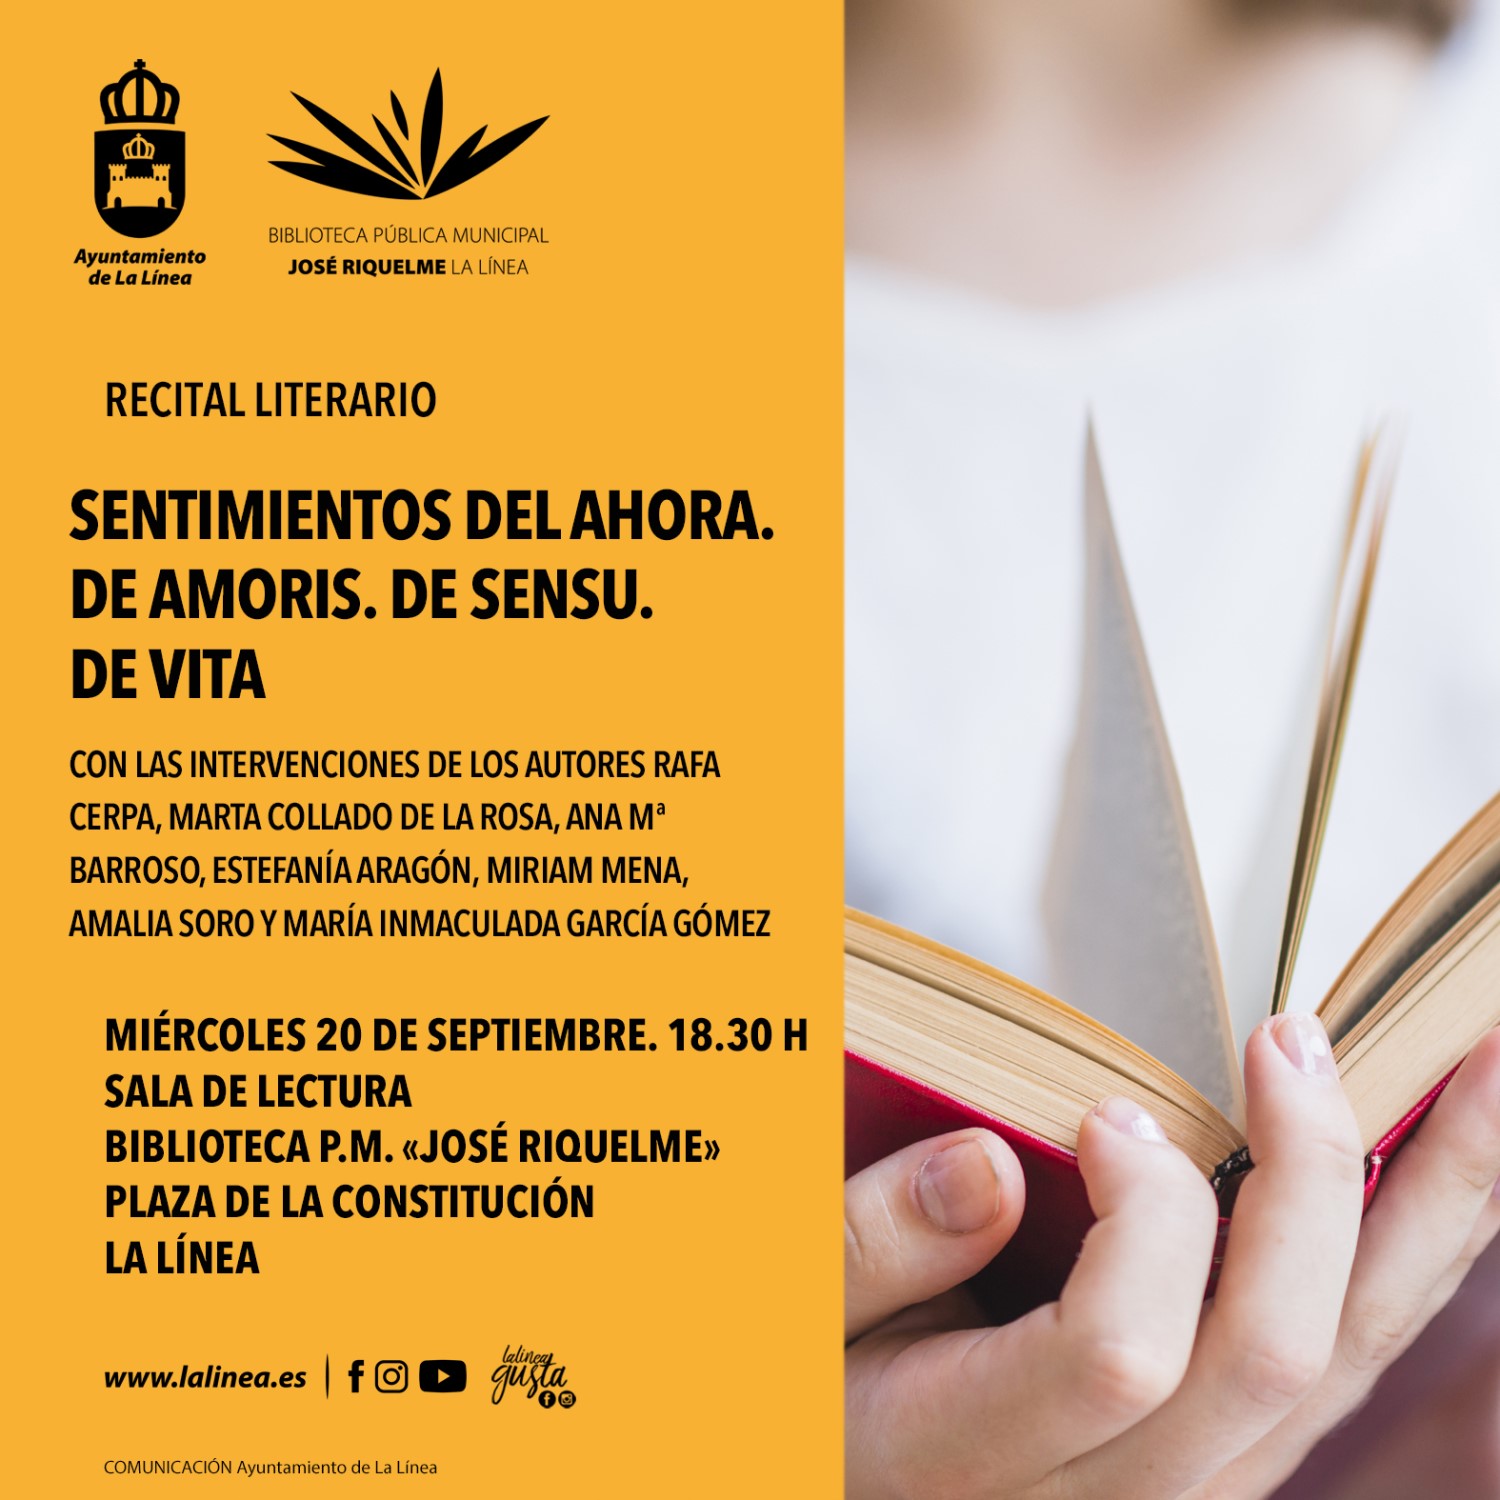 RRSS Biblioteca Recital Literario